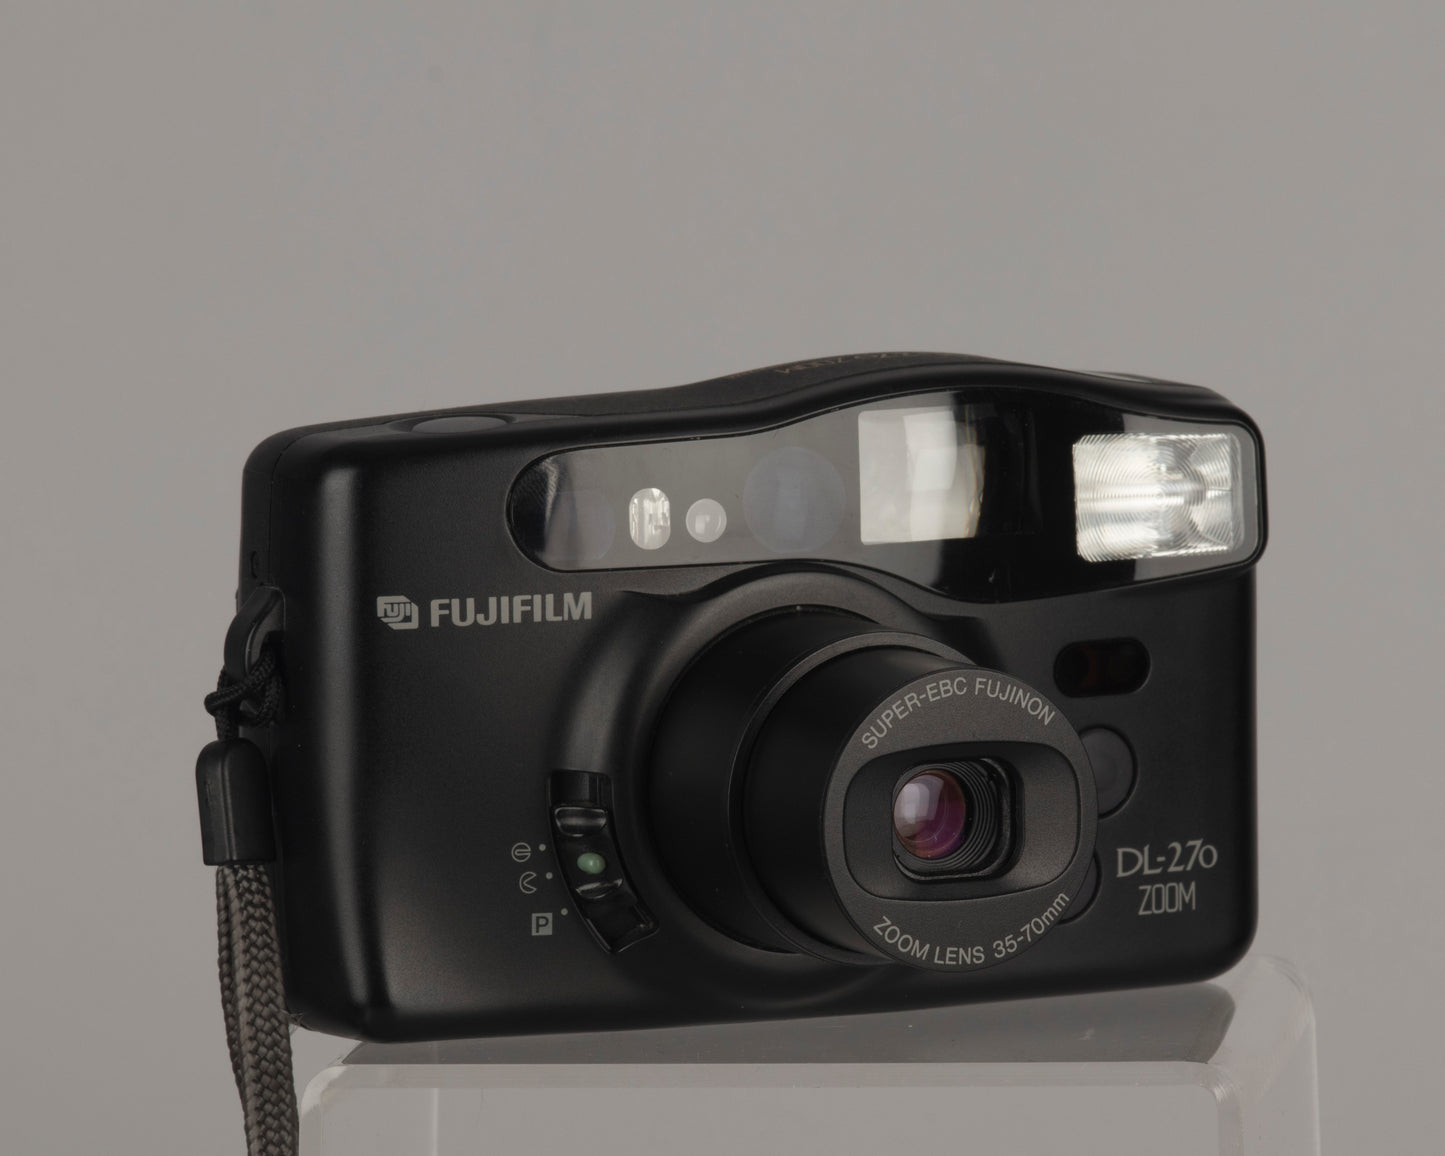 Fujifilm DL-270 Zoom 35mm camera with case (serial 90702255)